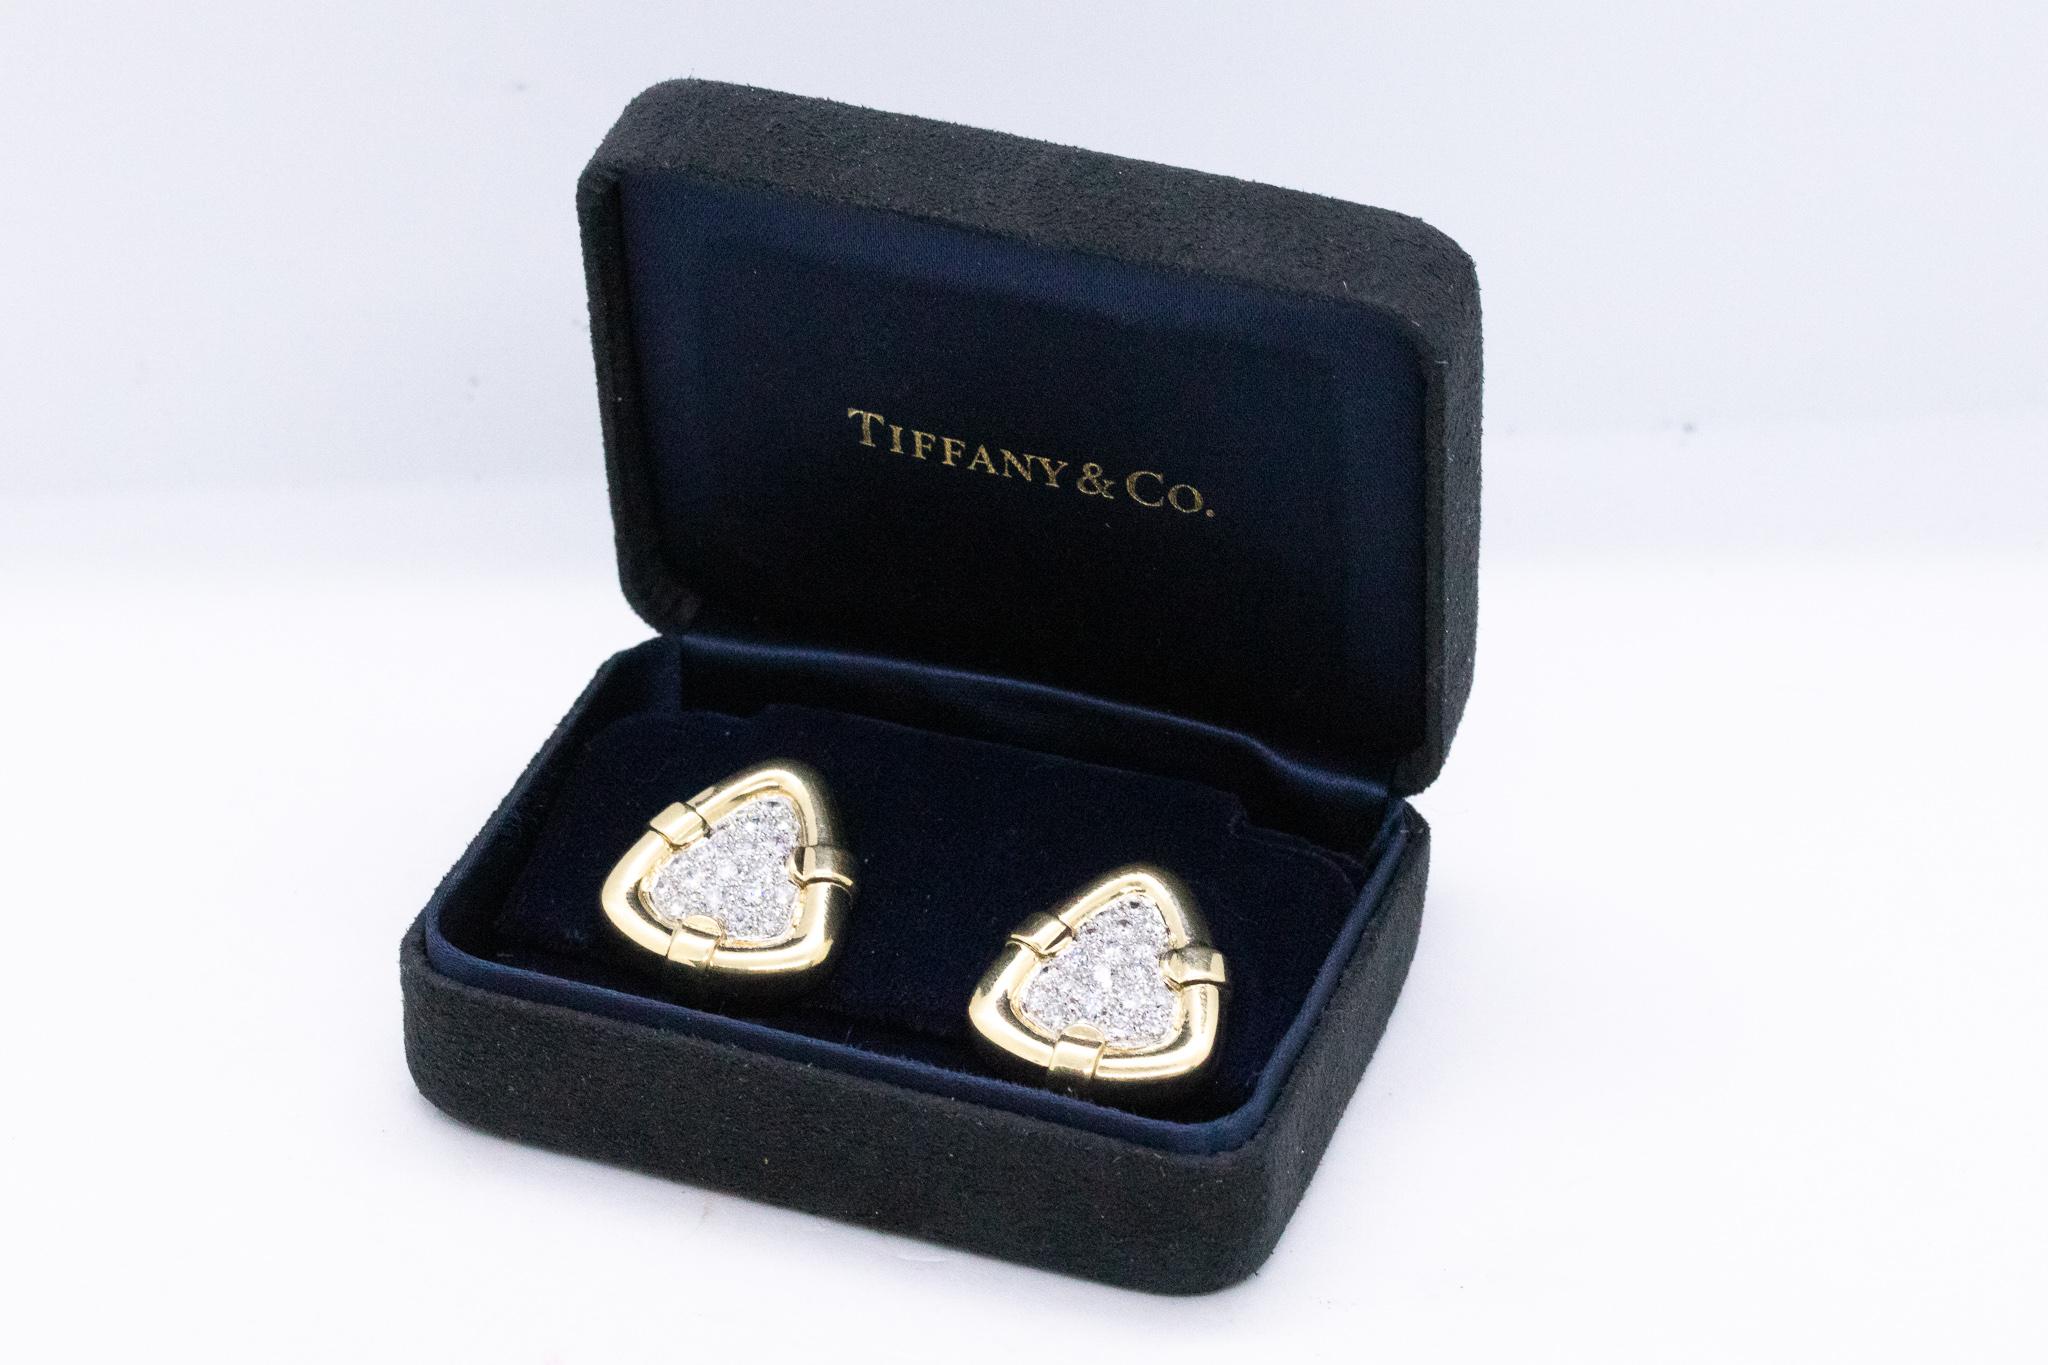 Women's Tiffany & Co. Rare Clips Earrings in 18Kt Gold with 3.84 Ctw in VVS-1 E Diamonds